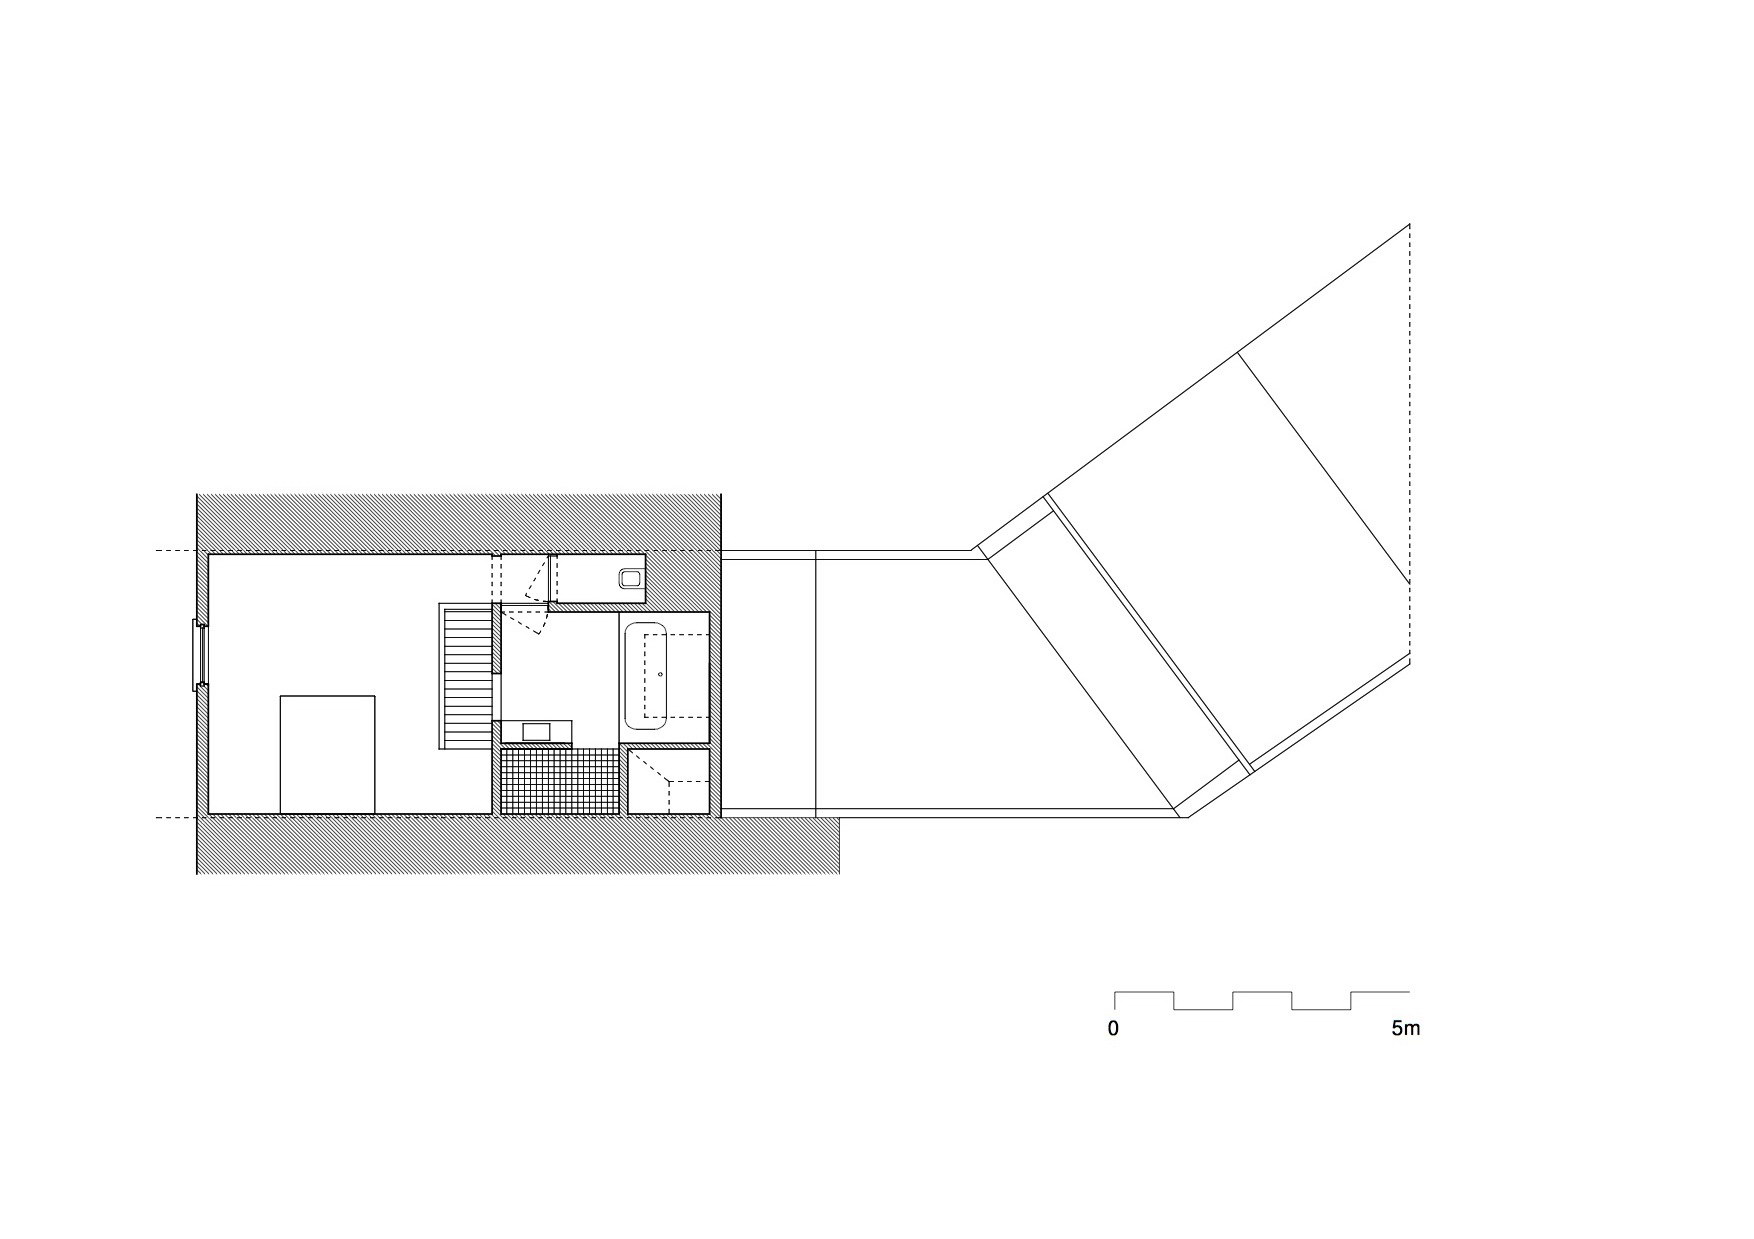 Tijl & Indra | House Renovation by Atelier Vens Vanbelle